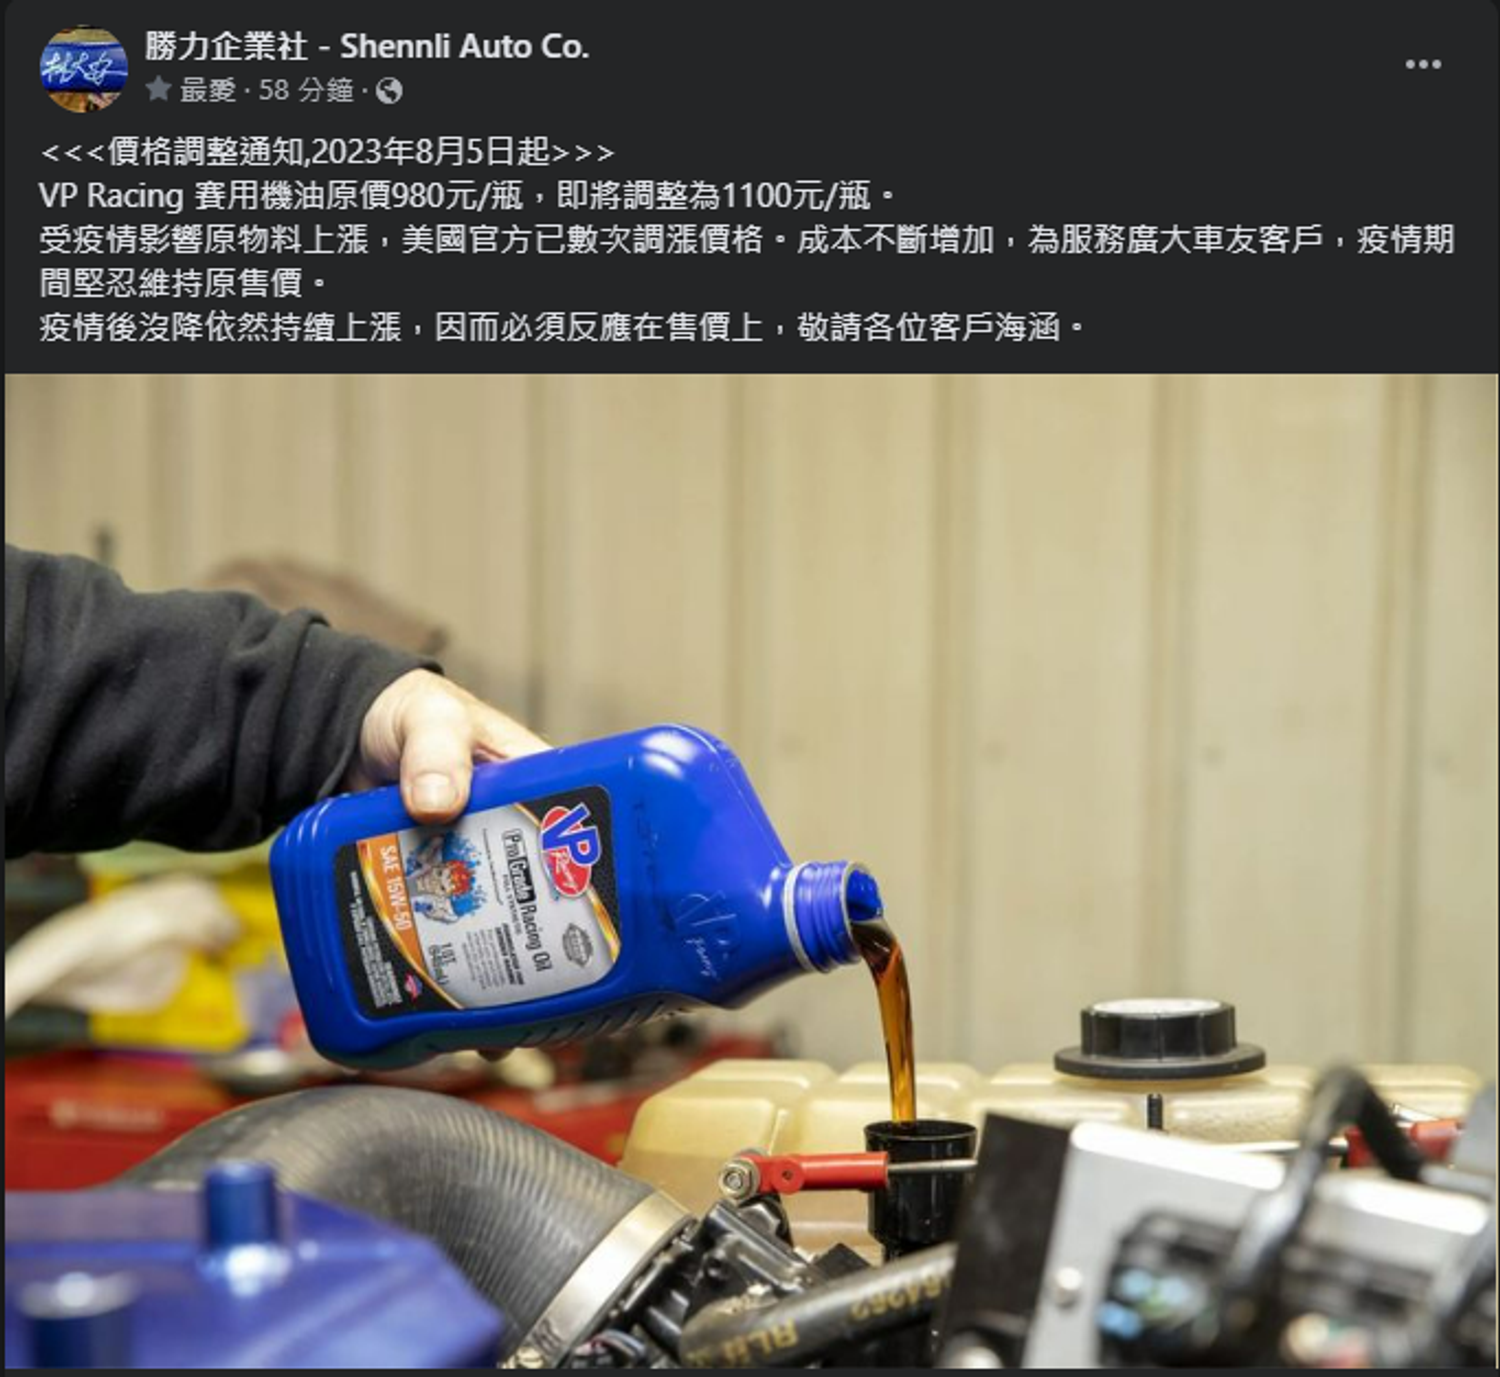 VP Racing Fuels Taiwan 勝力企業社 - 公告